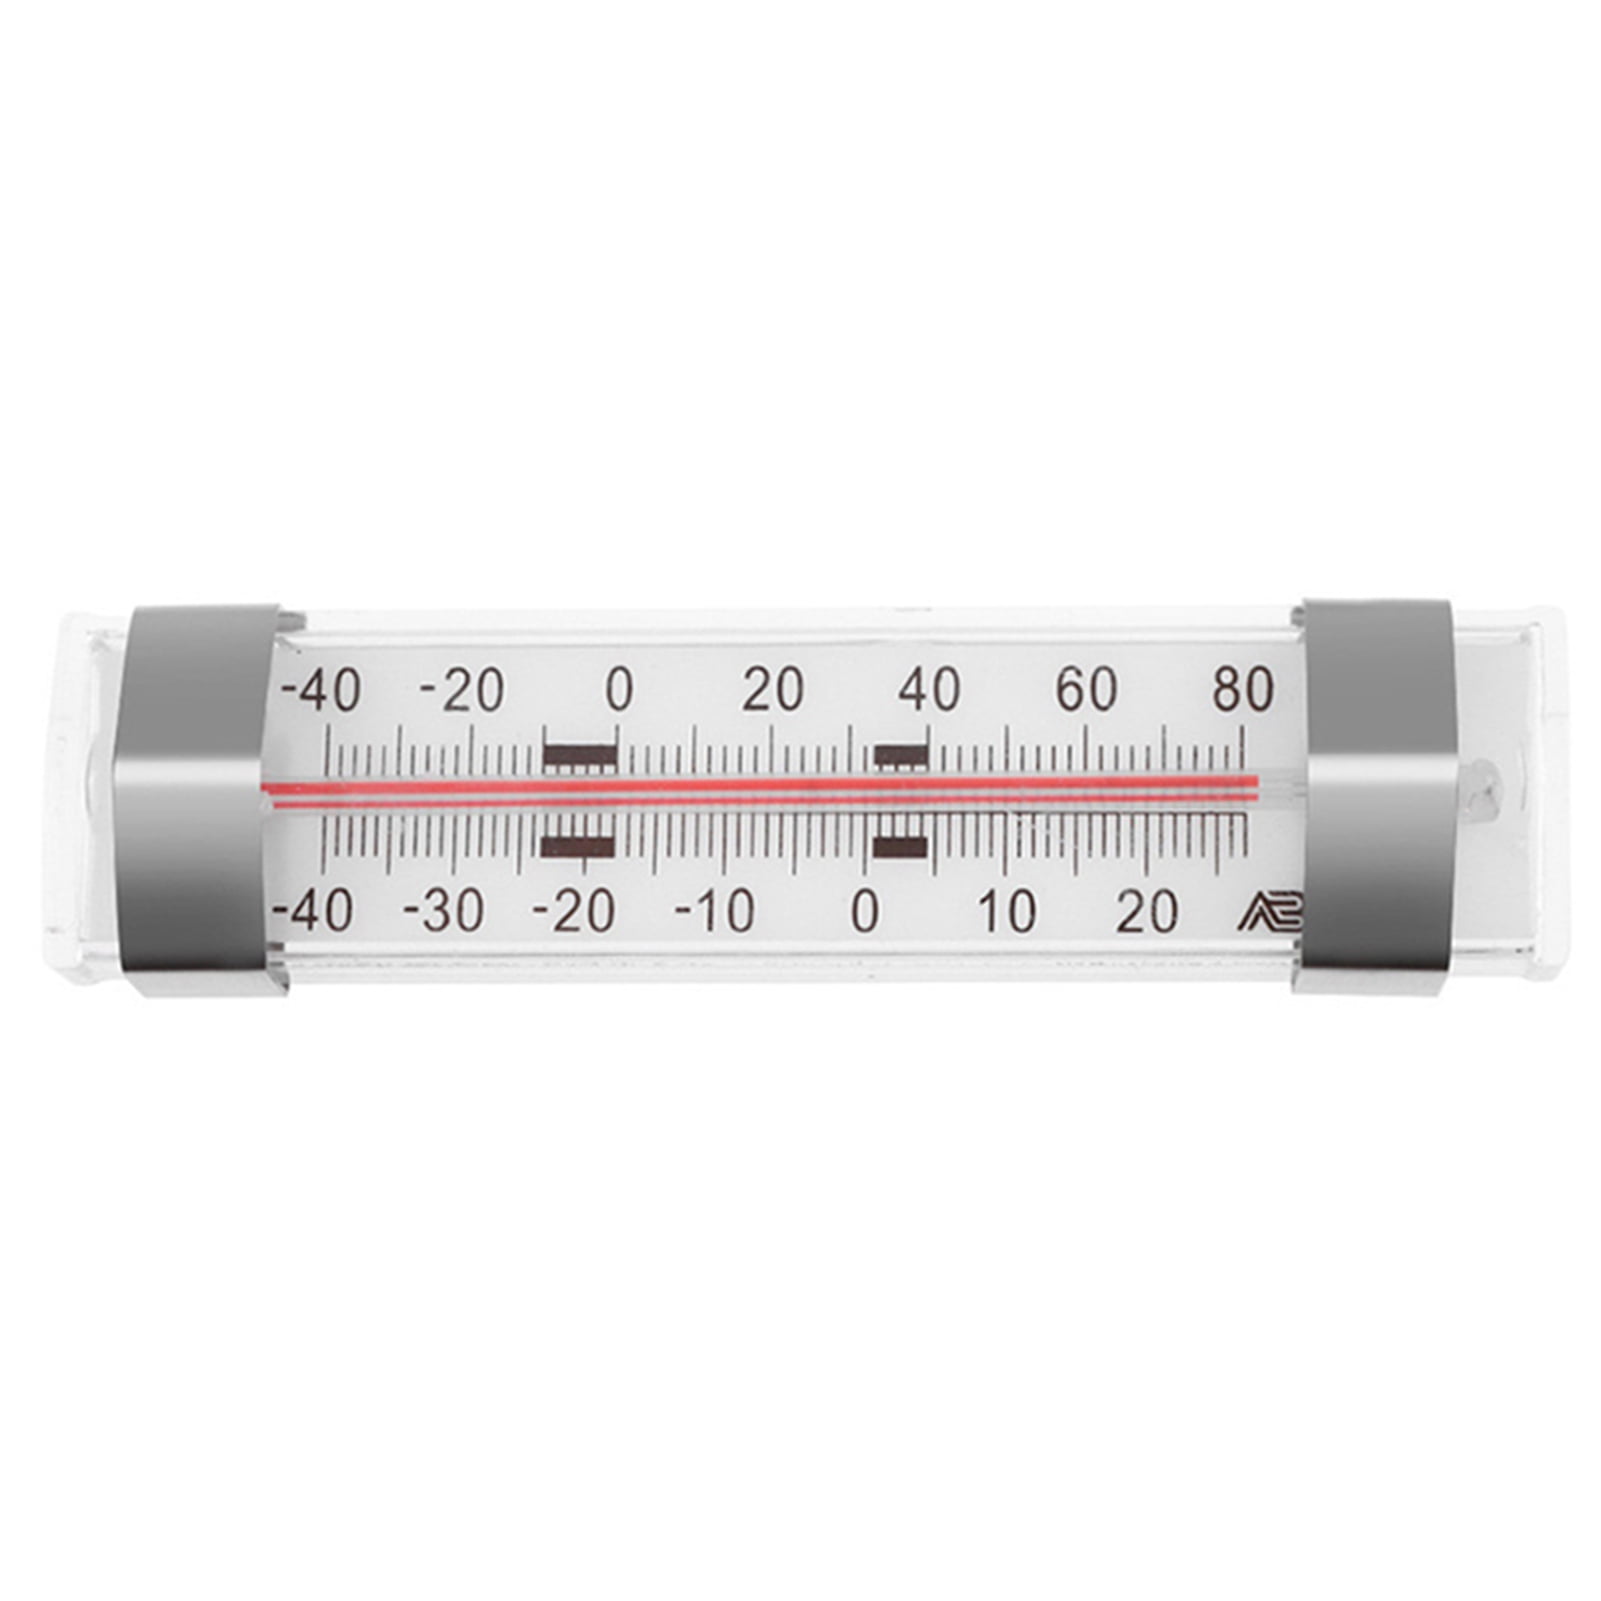 Taylor Precision 5981N - Thermometer, Refrigerator/Freezer